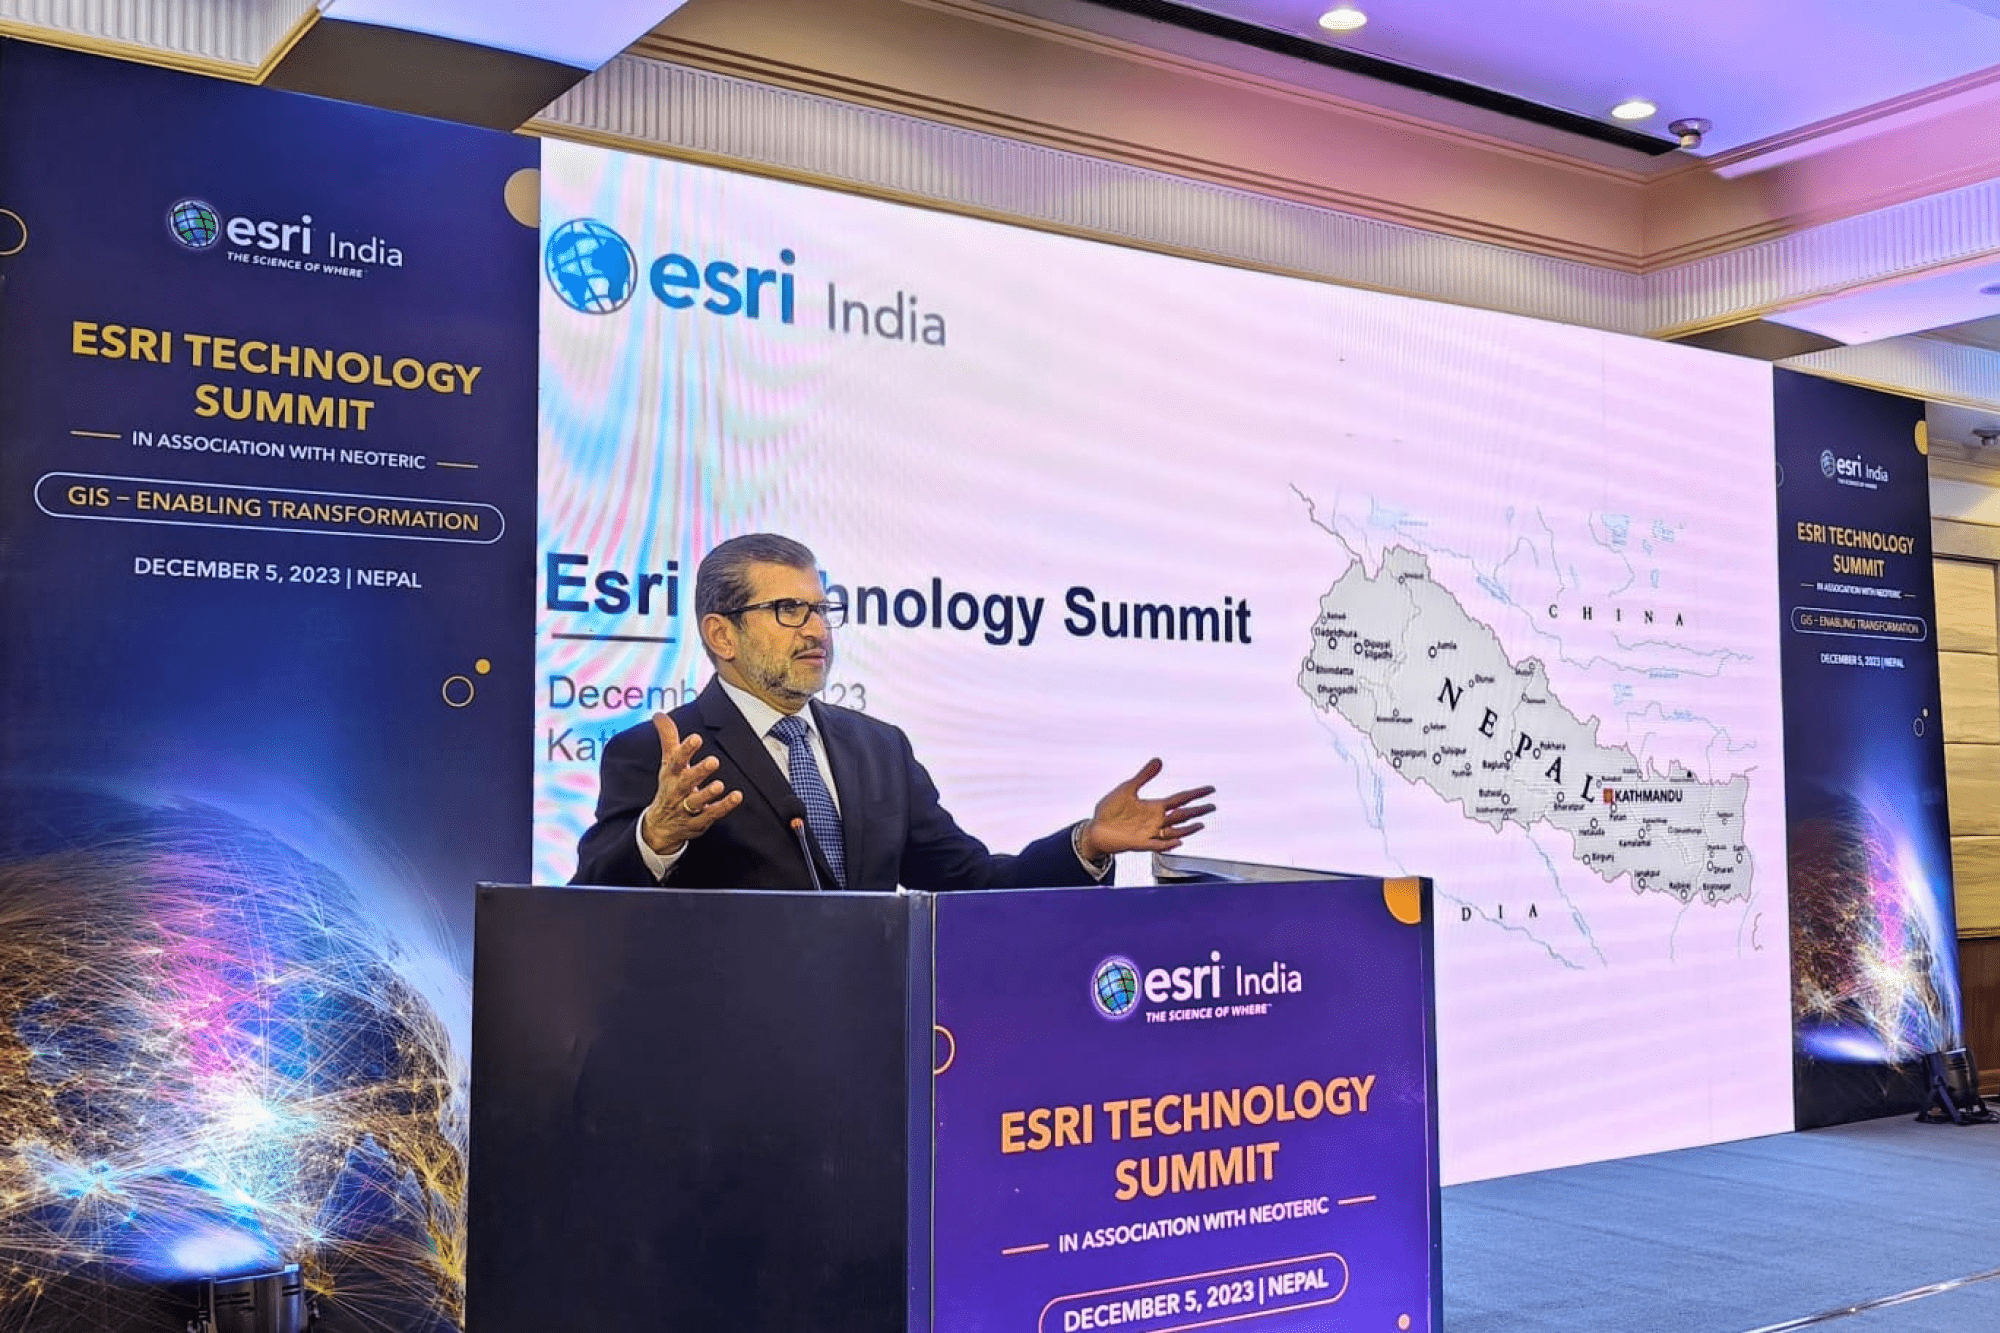 Esri Technology Summit